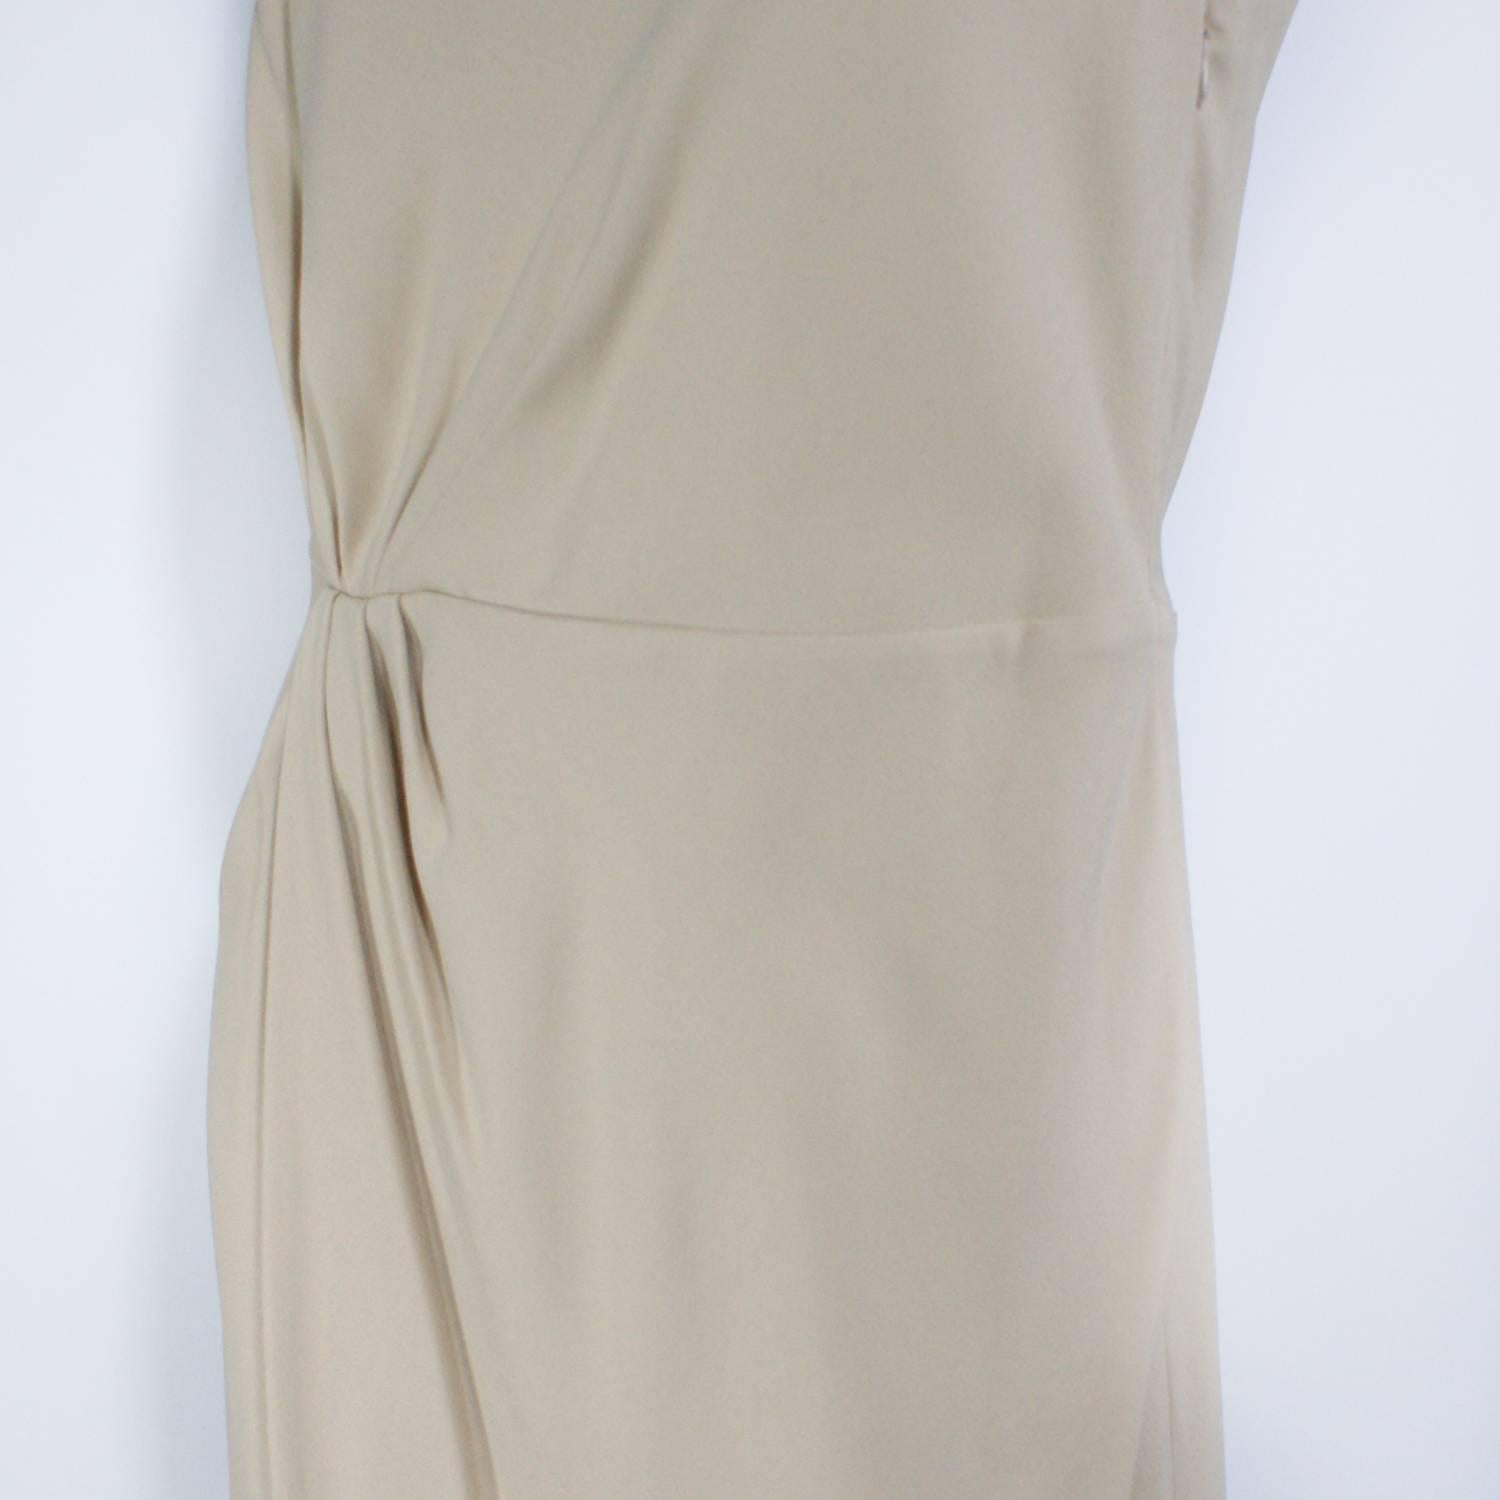 Valentino nude dress
Sleeveless
New with tags 
Originally $1790.00
Size 8